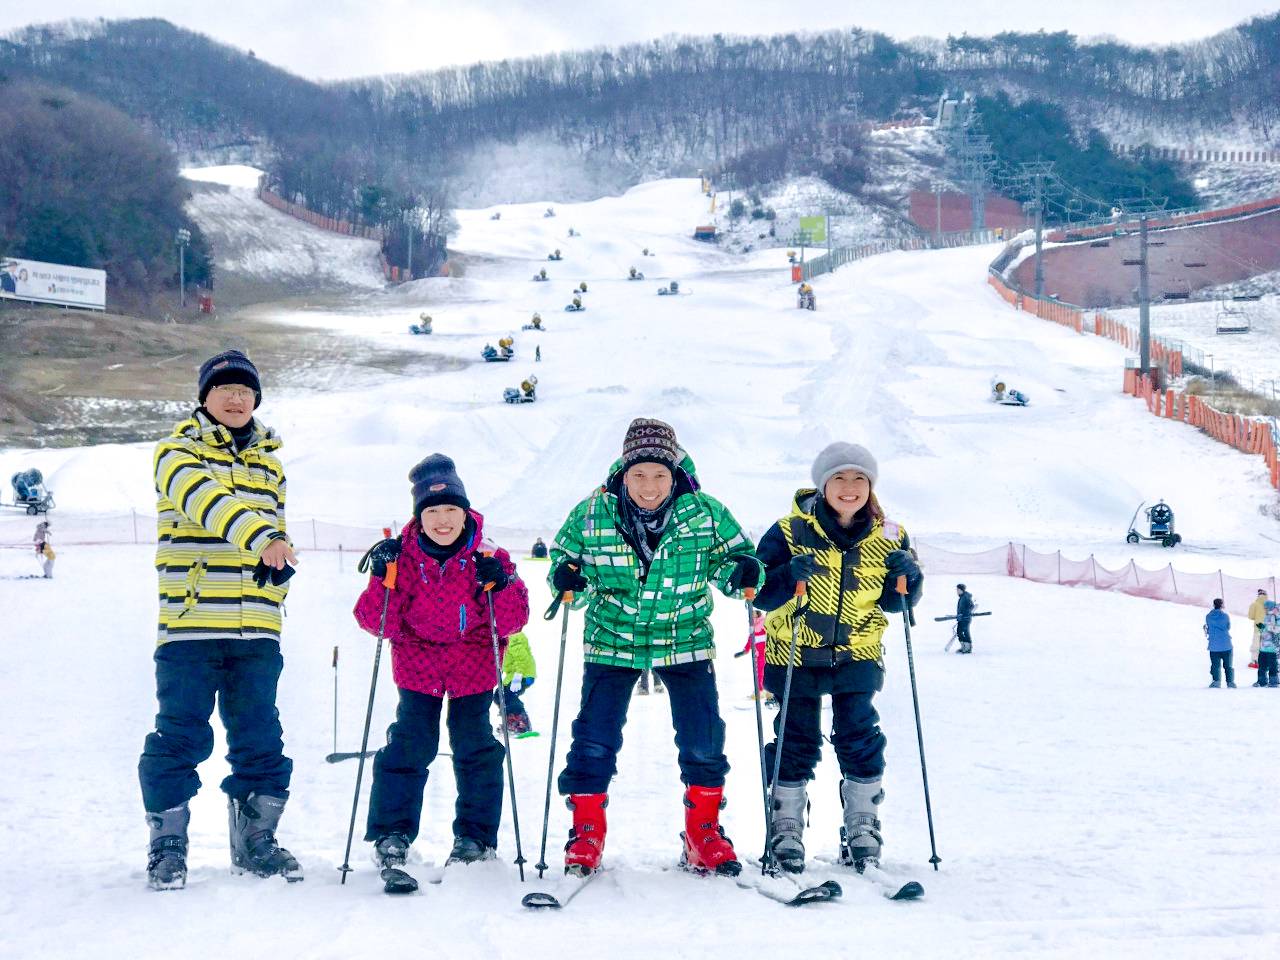 TOUR HÀN QUỐC TẾT NGUYÊN ĐÁN: Seoul - Elysia Ski - Lotte World